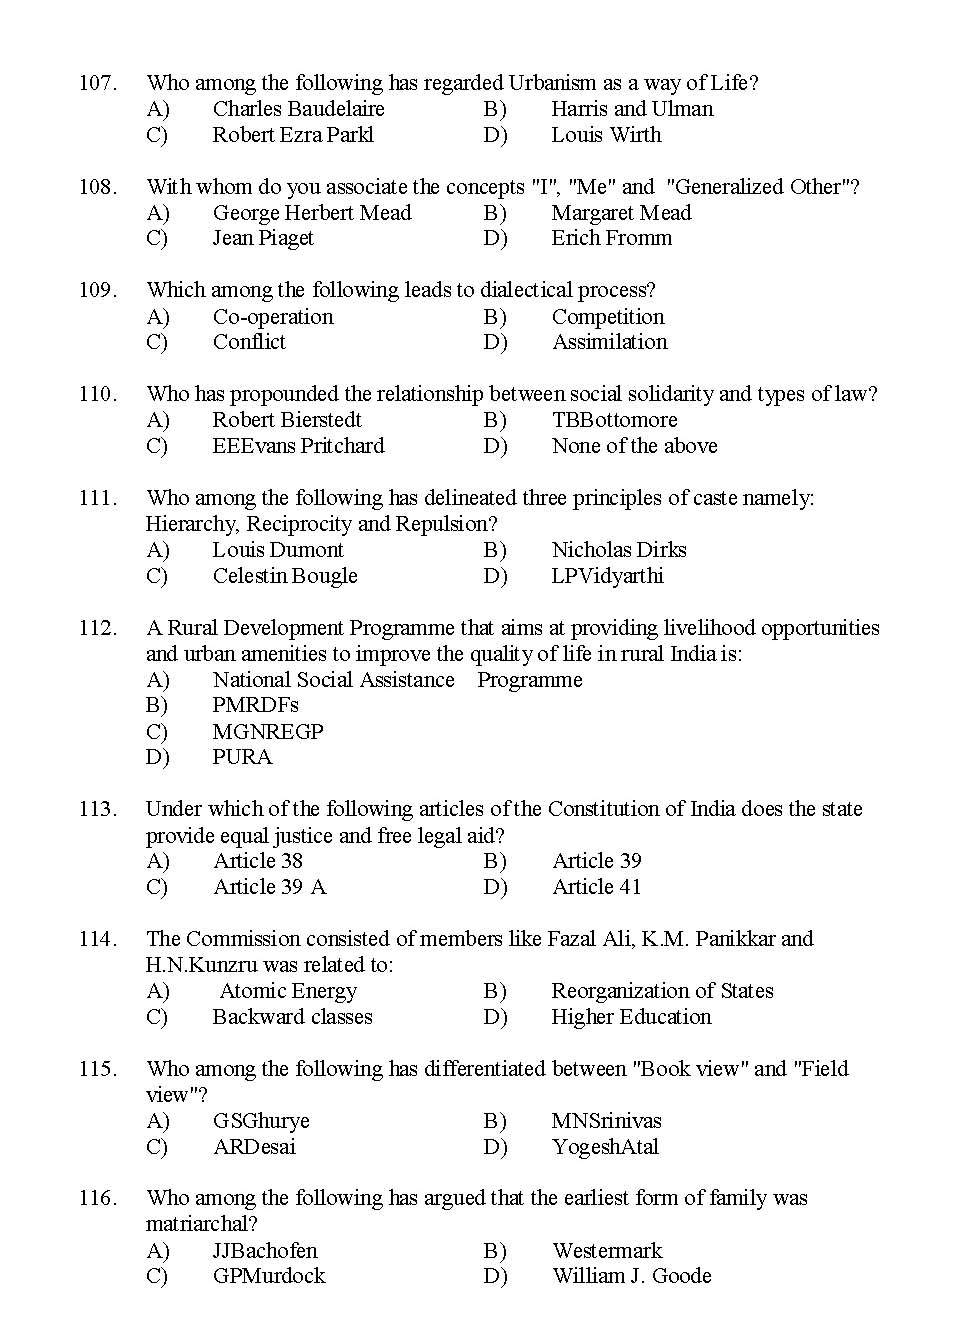 Kerala SET Sociology Exam 2014 Question Code 14230 14